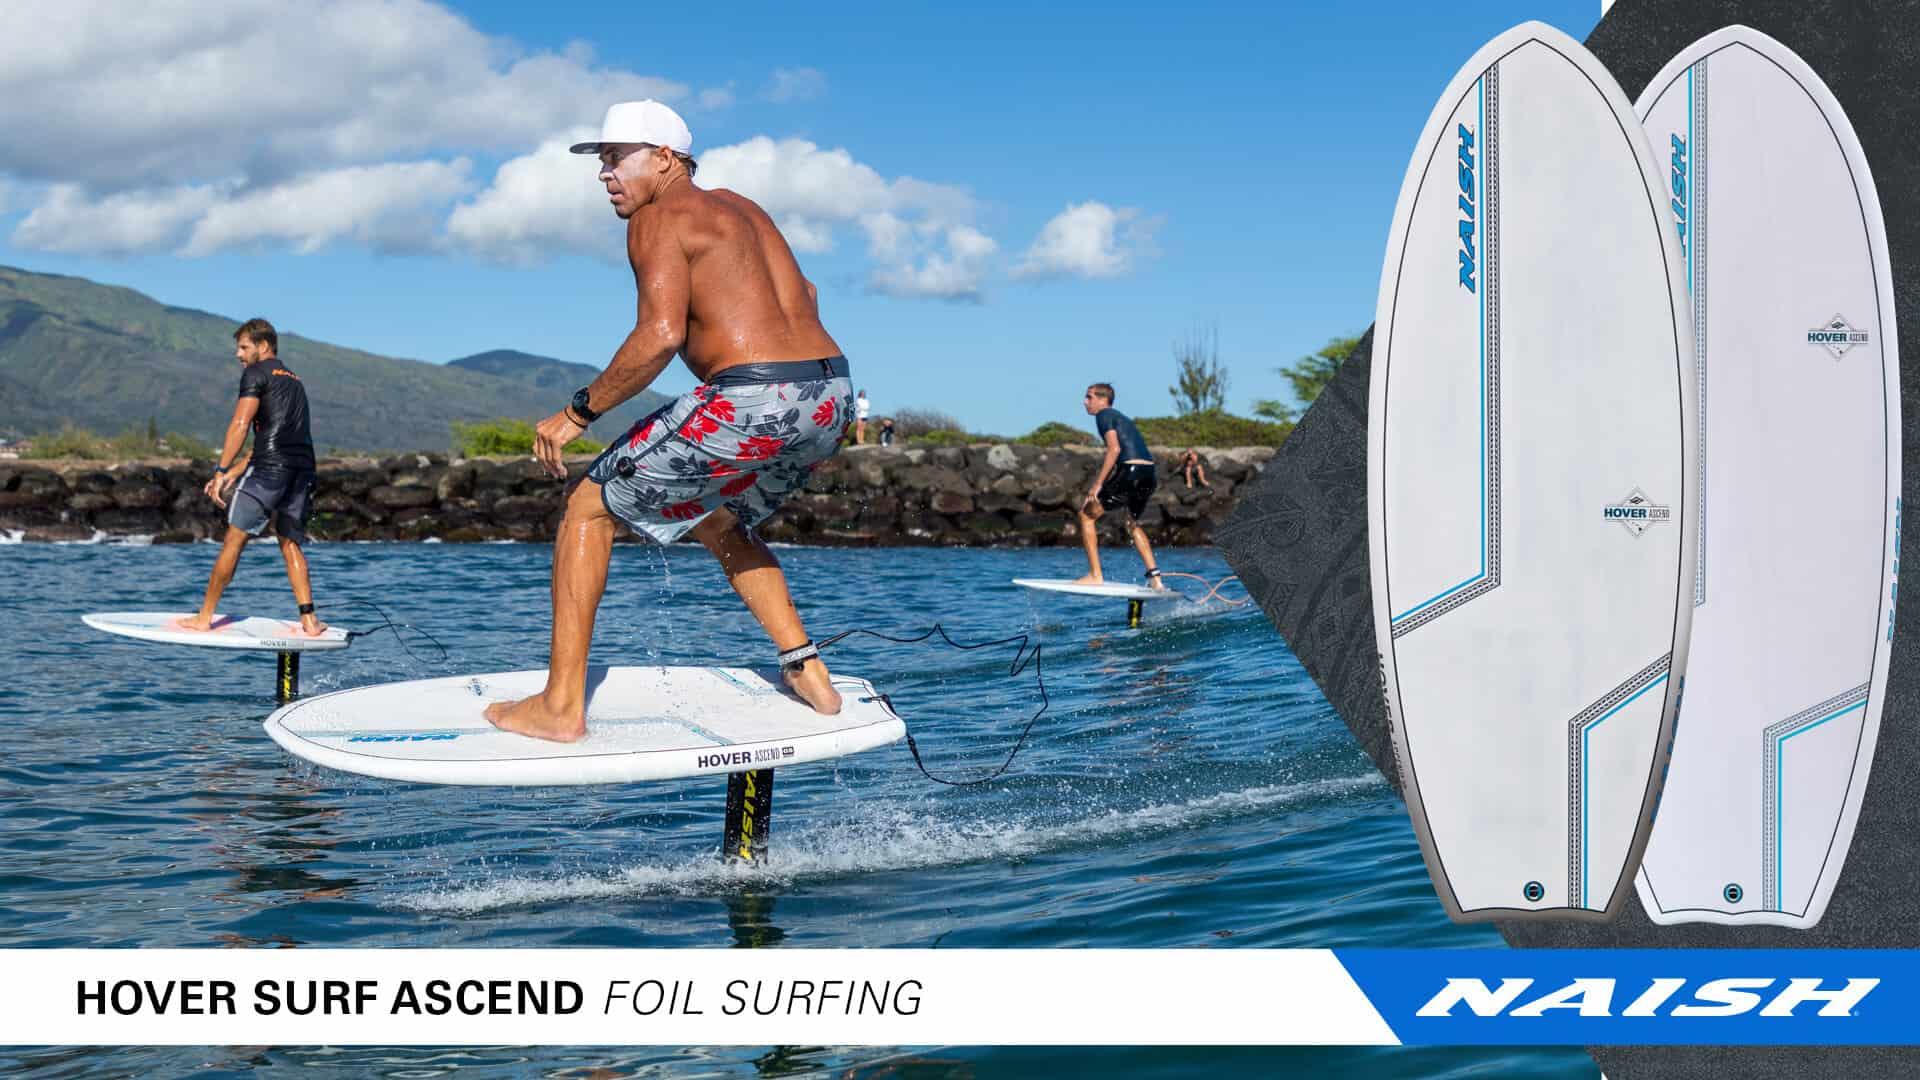 Introducing the New Naish Hover Surf Ascend Foilboards - Naish.com